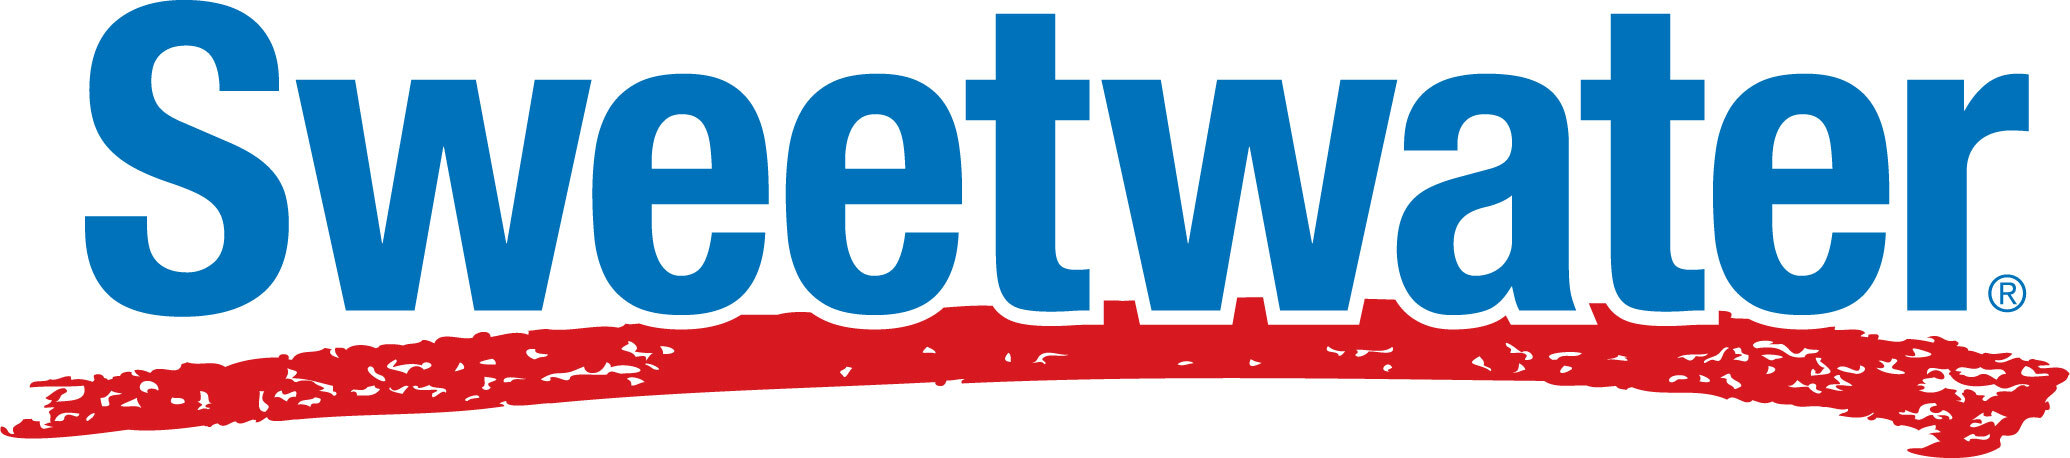 sweetwater-logo-digital.jpg